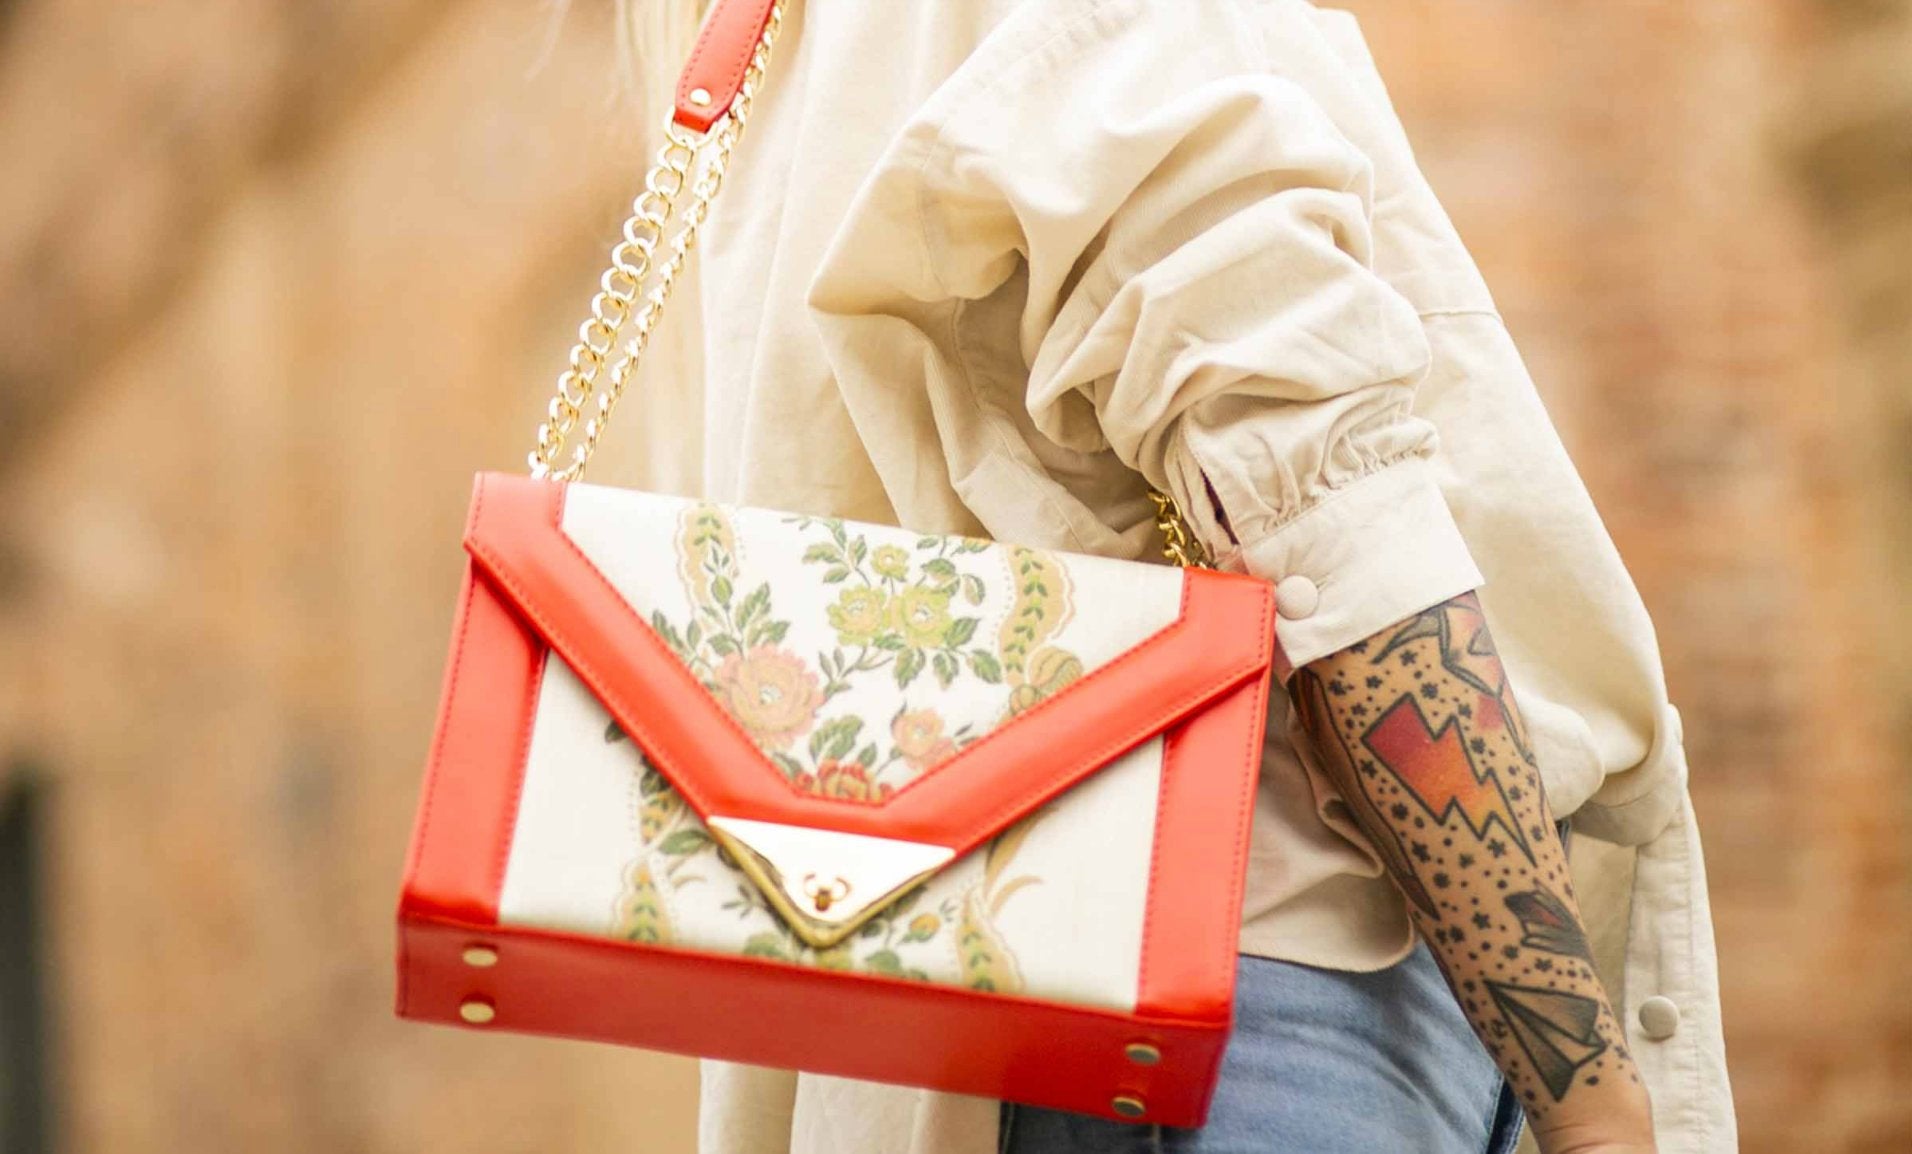 Lucky Brand Lola, Eco Red Crossbody: Handbags